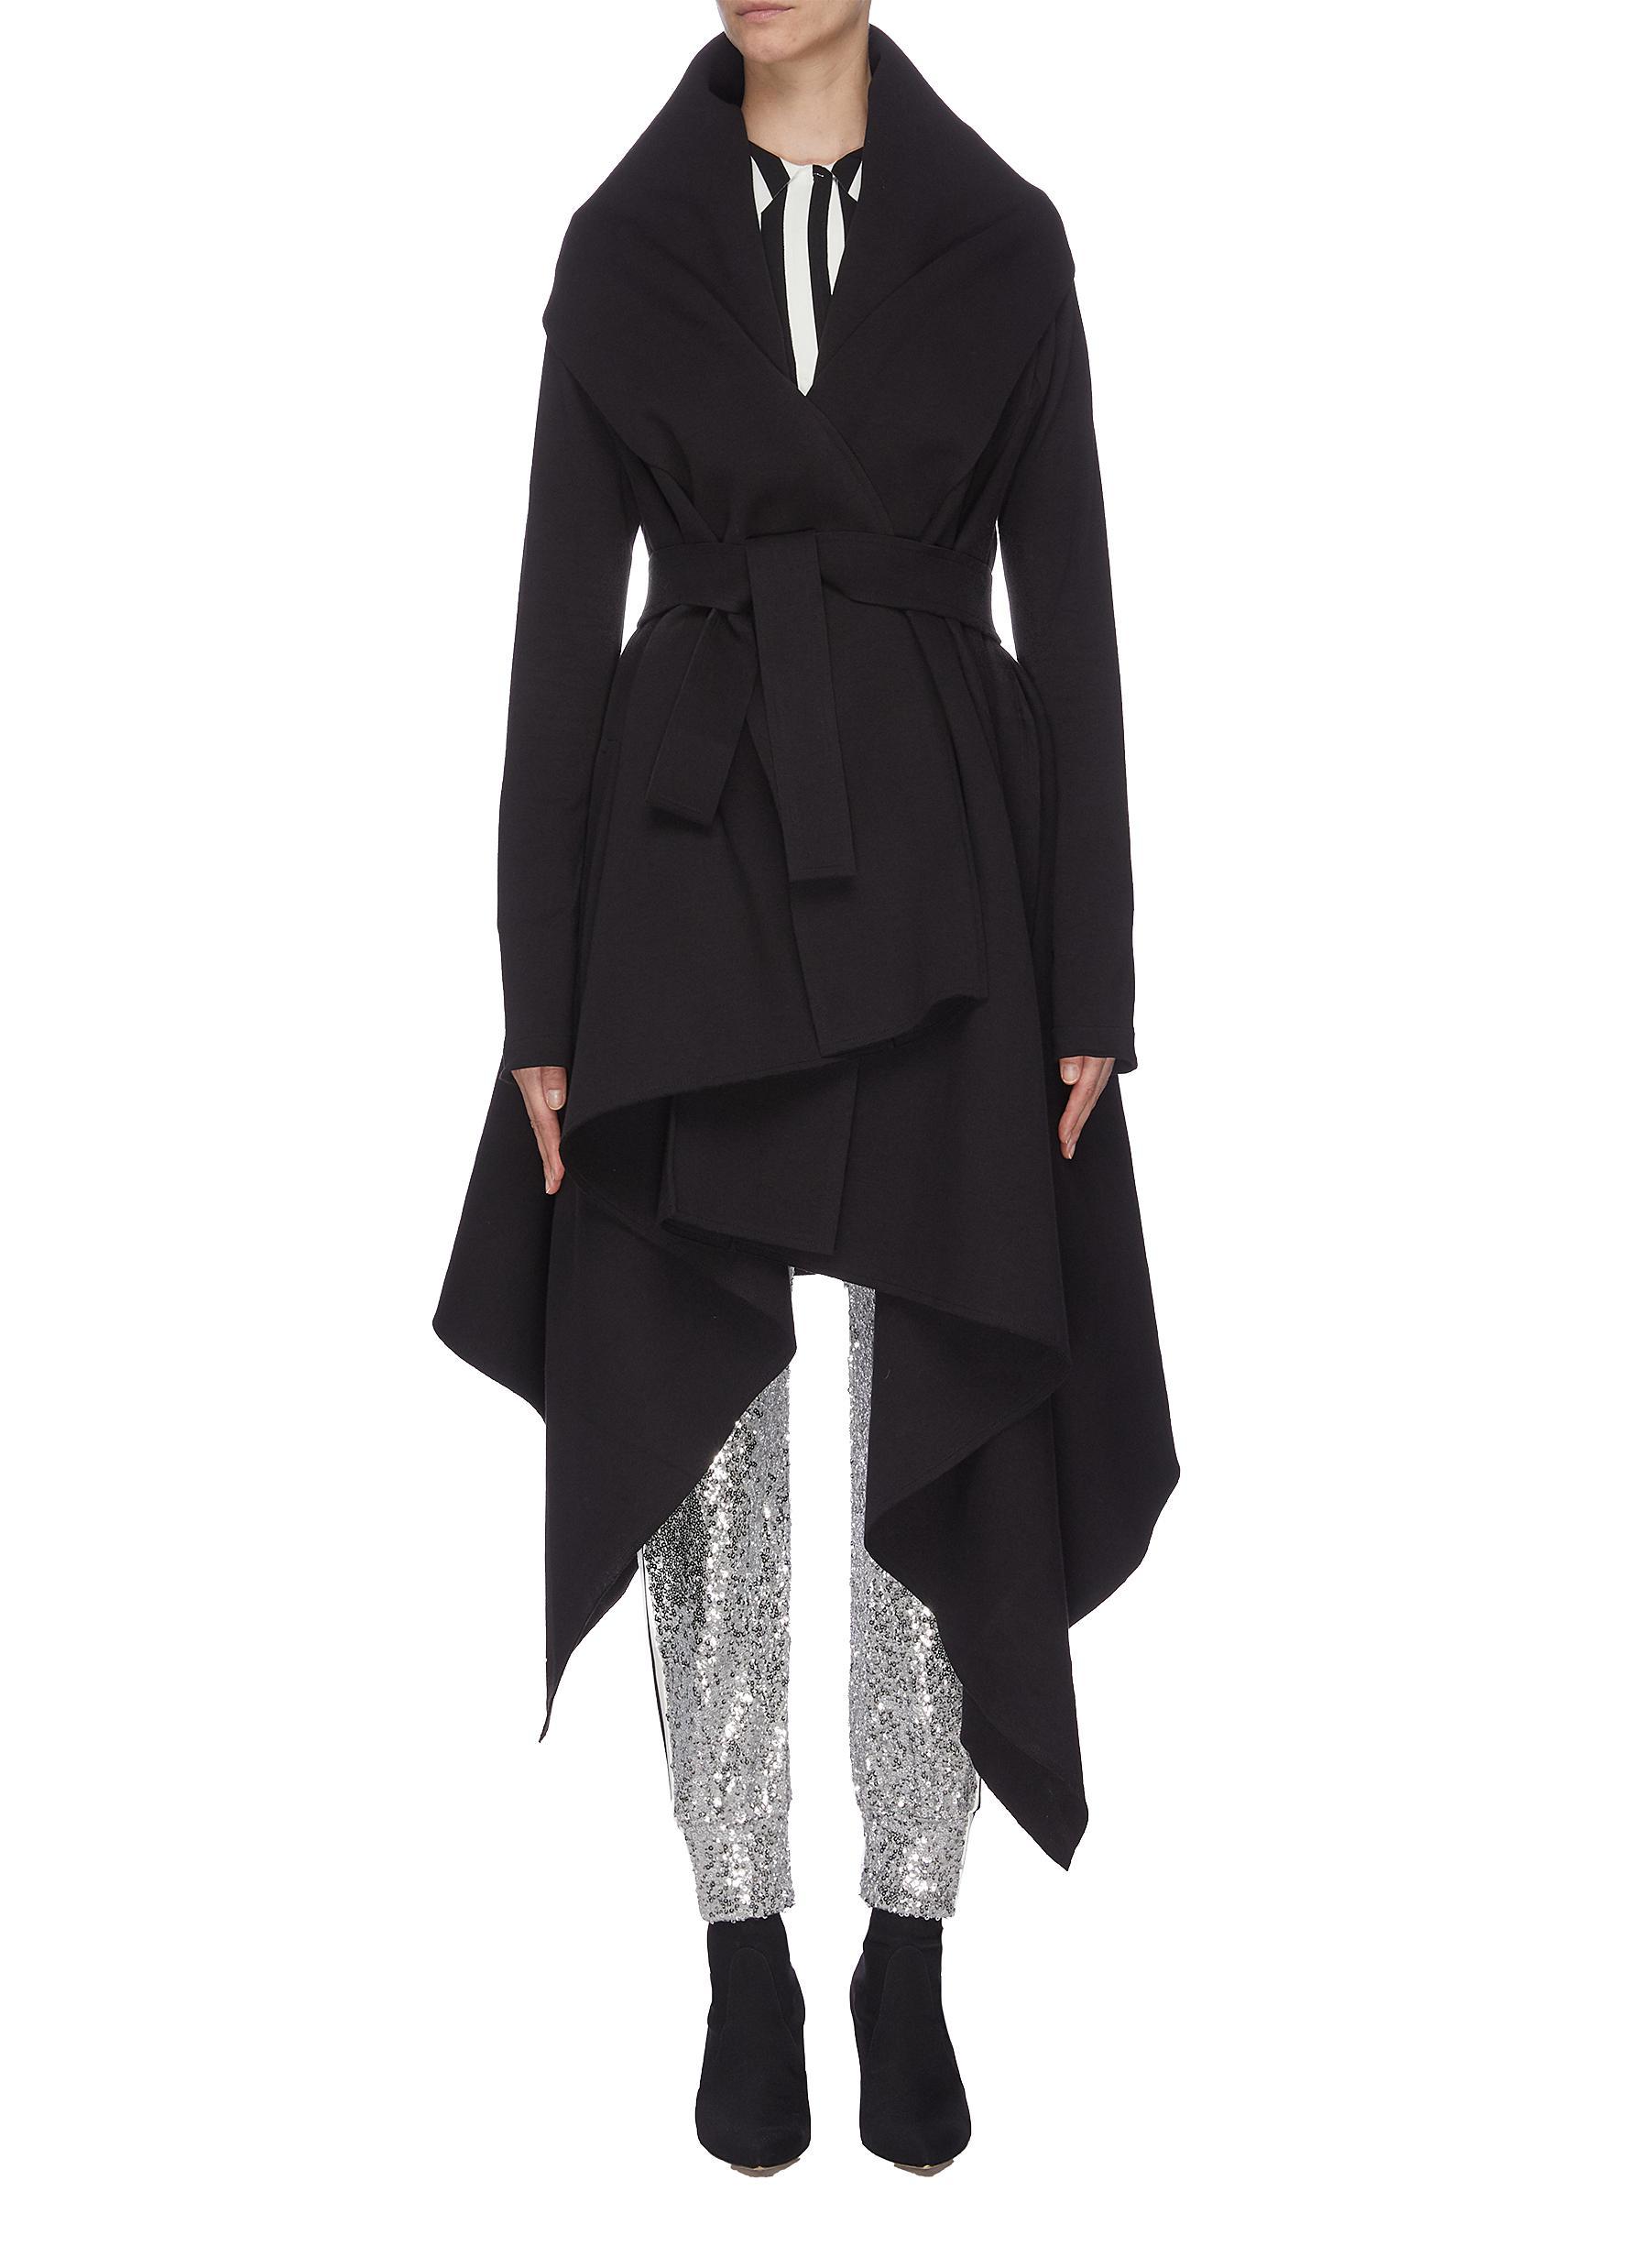 Norma Kamali Cotton Belted Asymmetric Draped Robe Coat in Black - Lyst